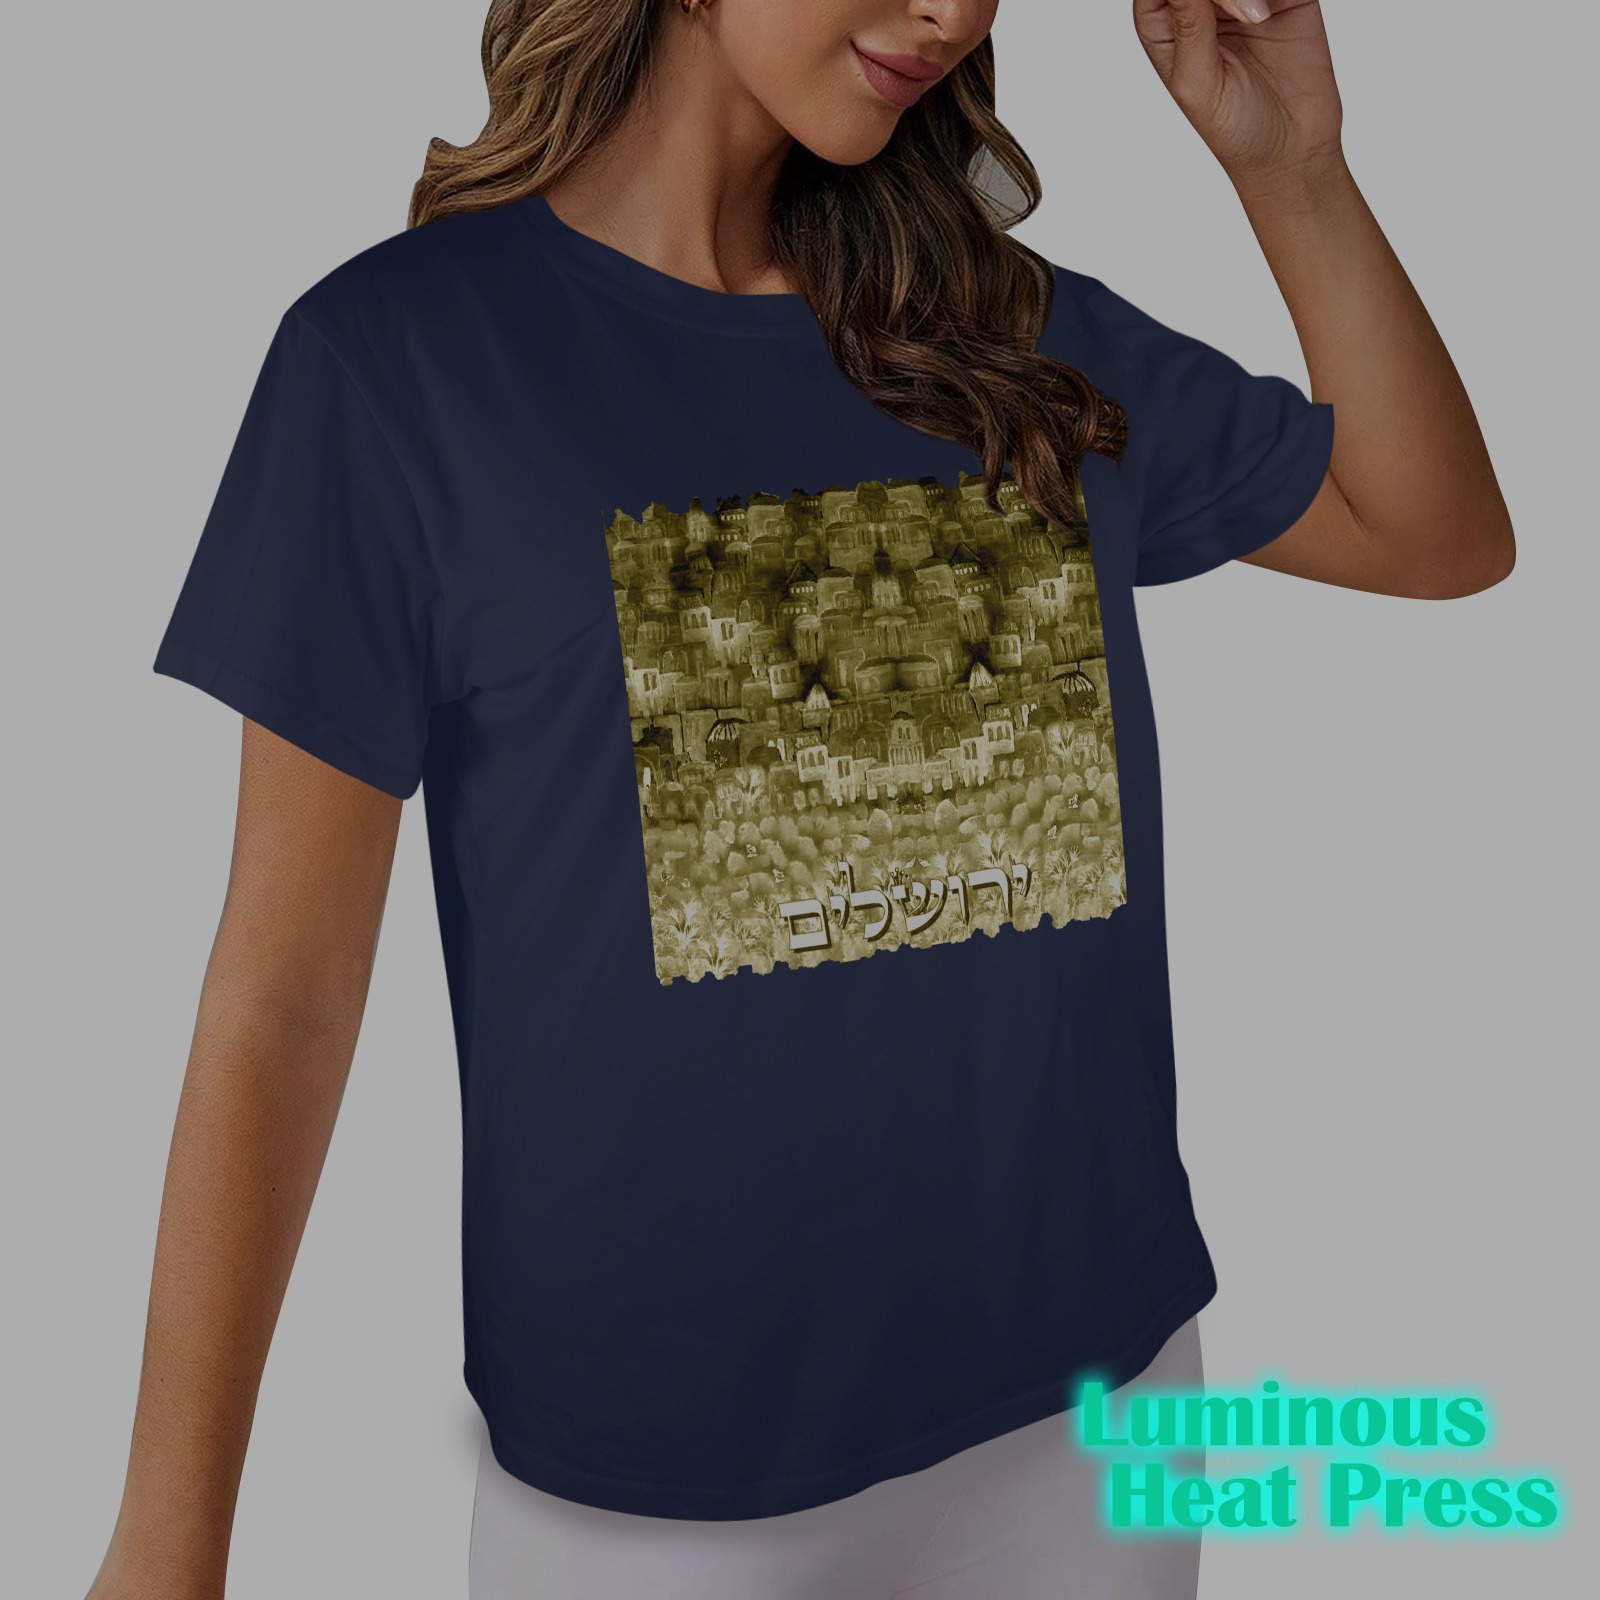 Jerusalem dechire gold Women's Glow in the Dark T-shirt (Front Printing)